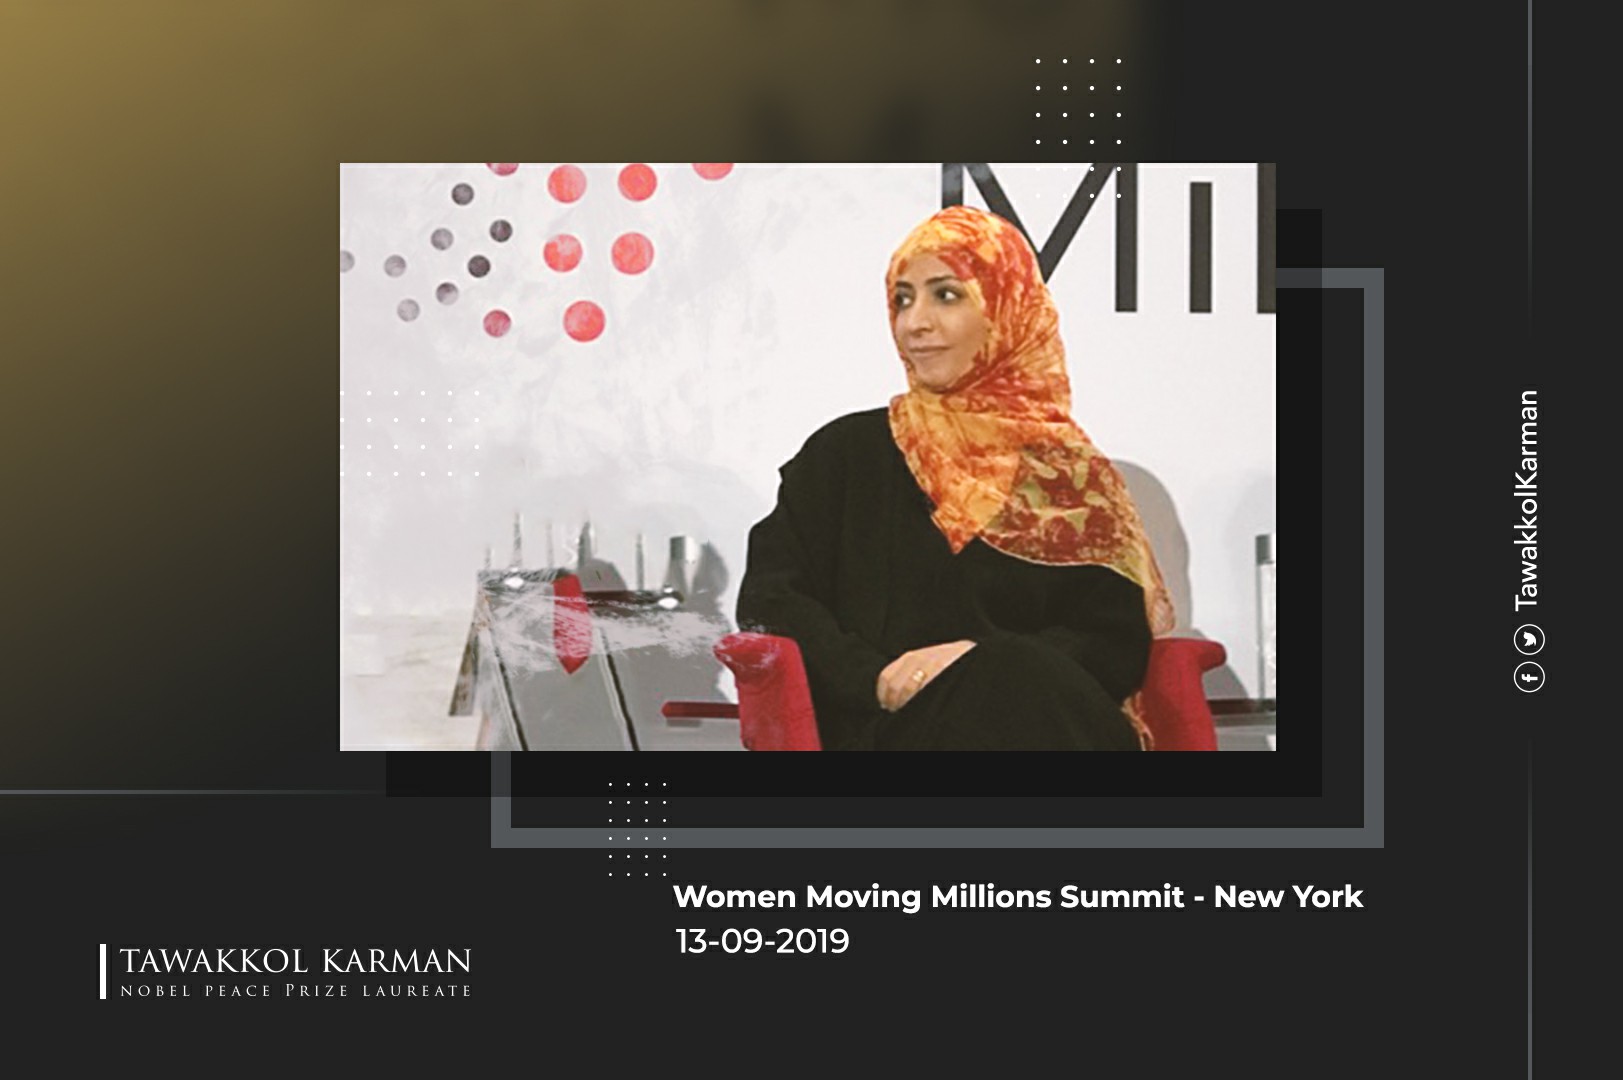 Participation of Tawakkol Karman in the Women Moving Millions Summit